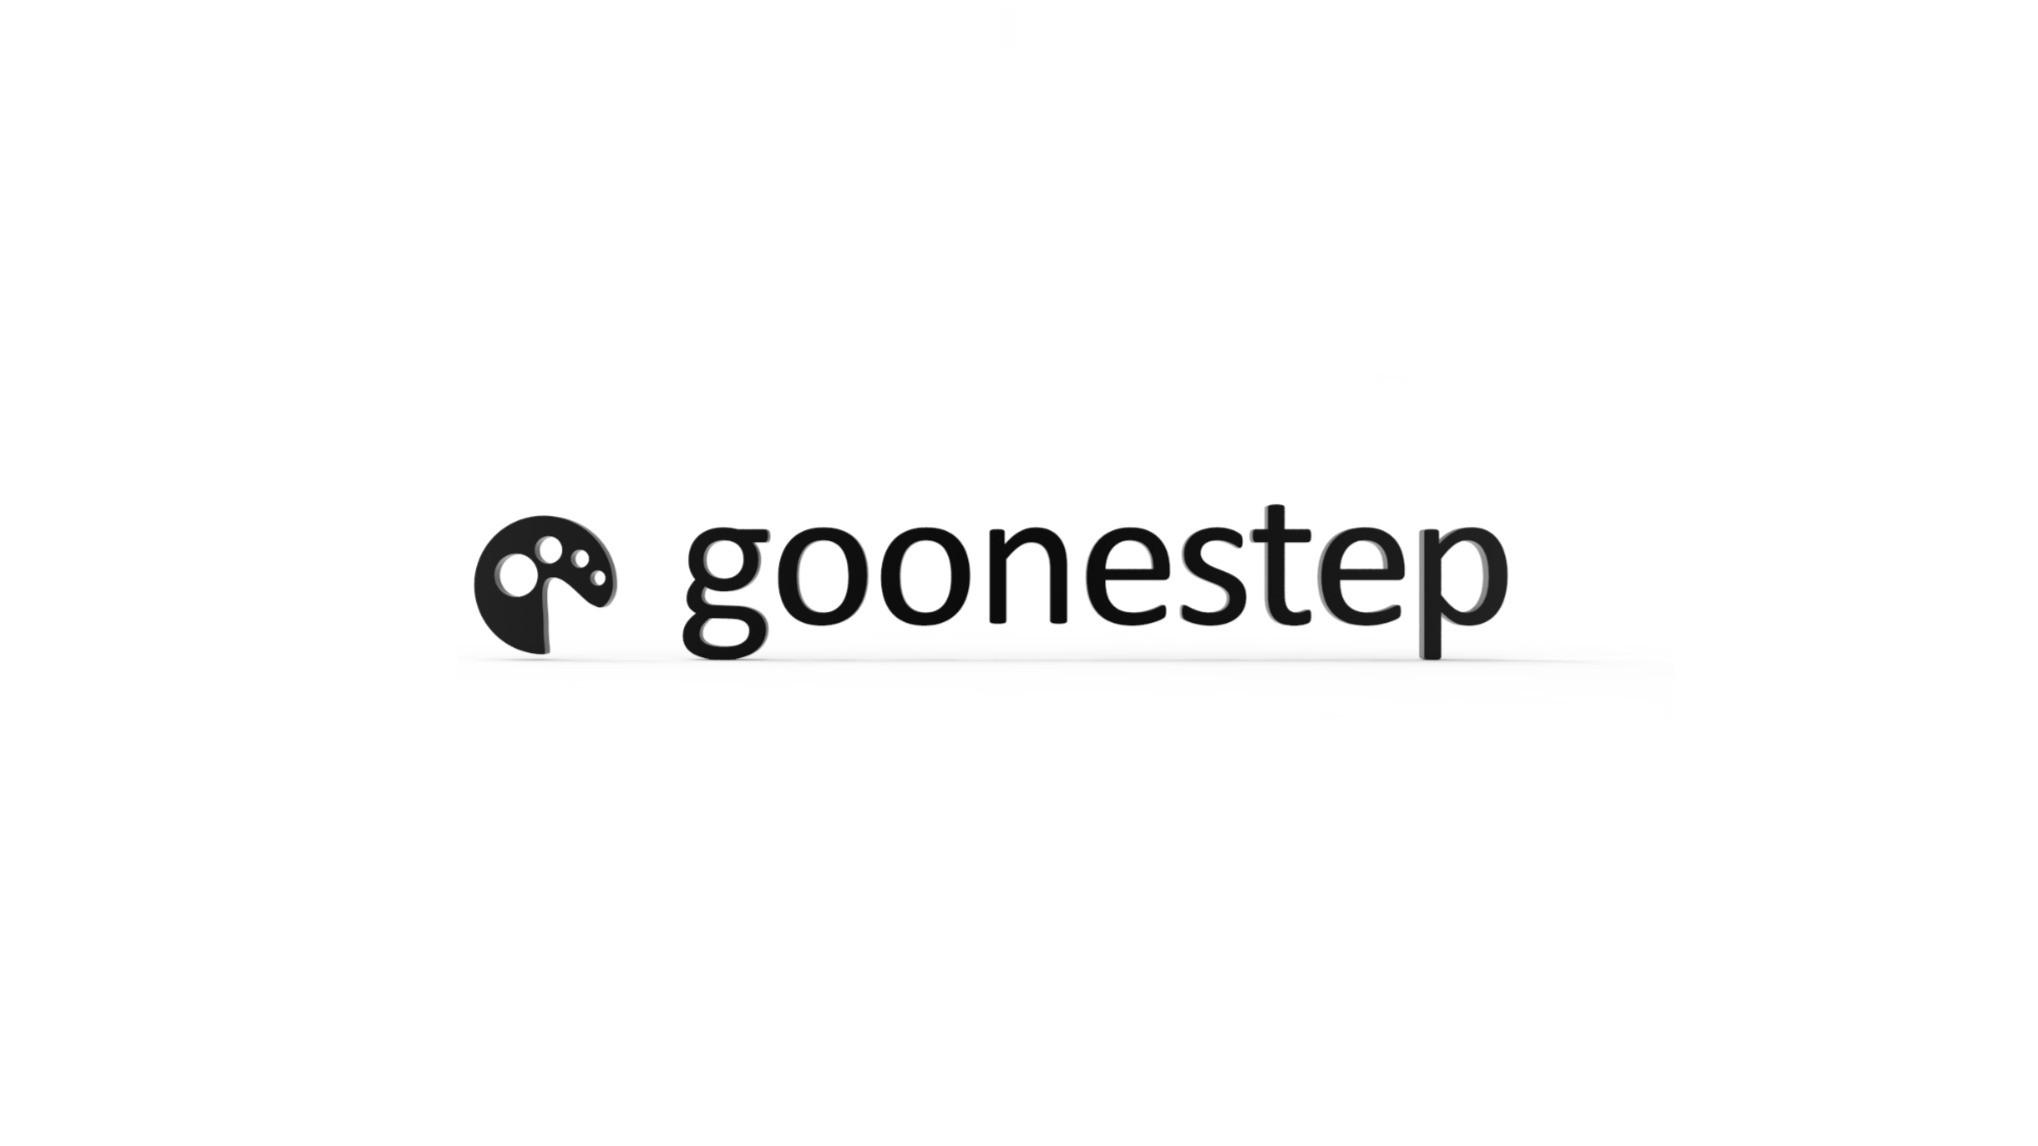 Product Simulations | goonestep image